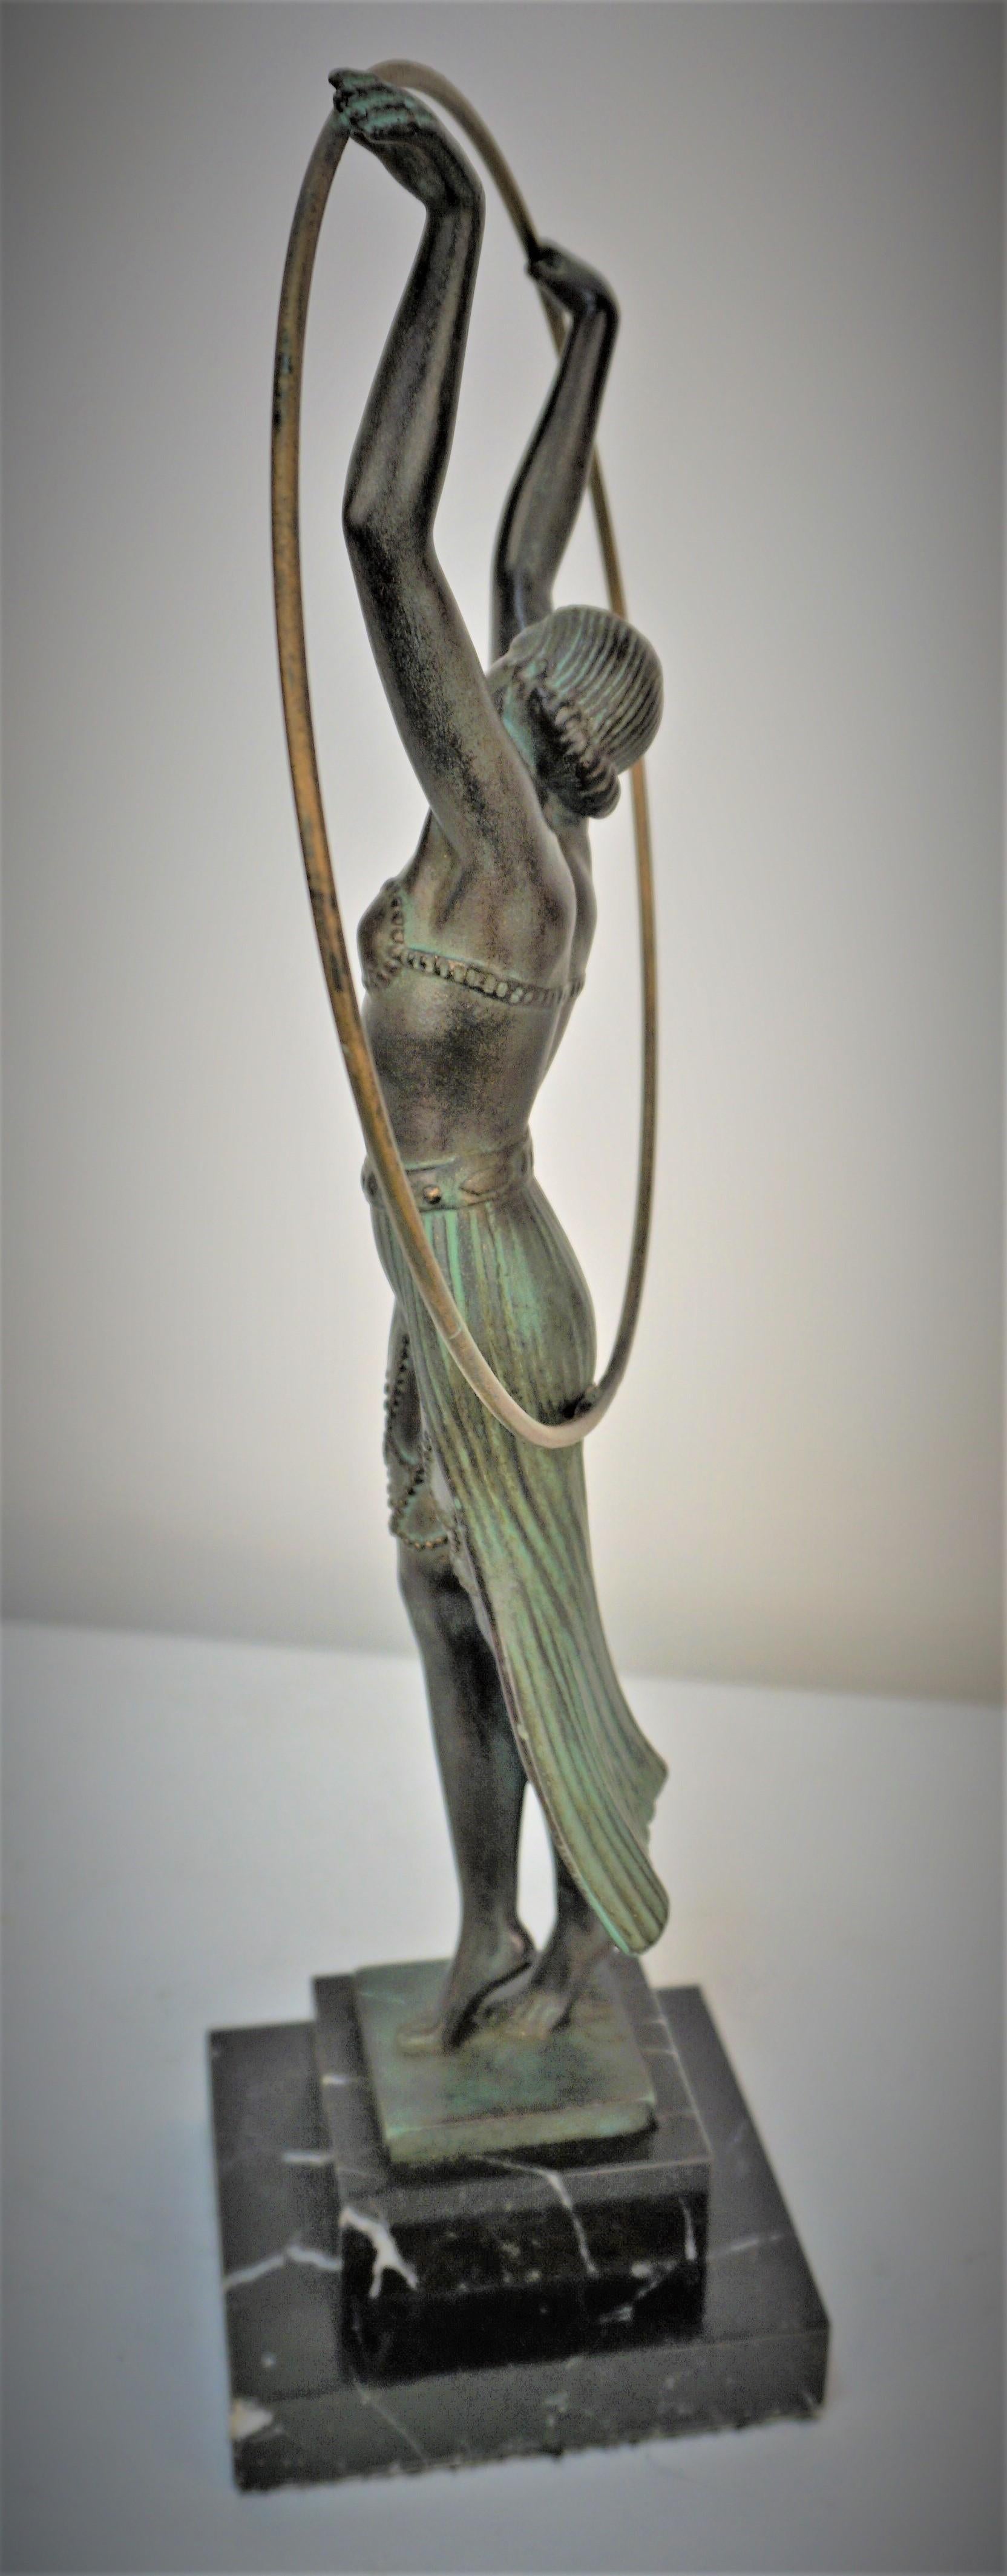 Charles Art Deco Sculpture Hoop Dancer  For Sale 3